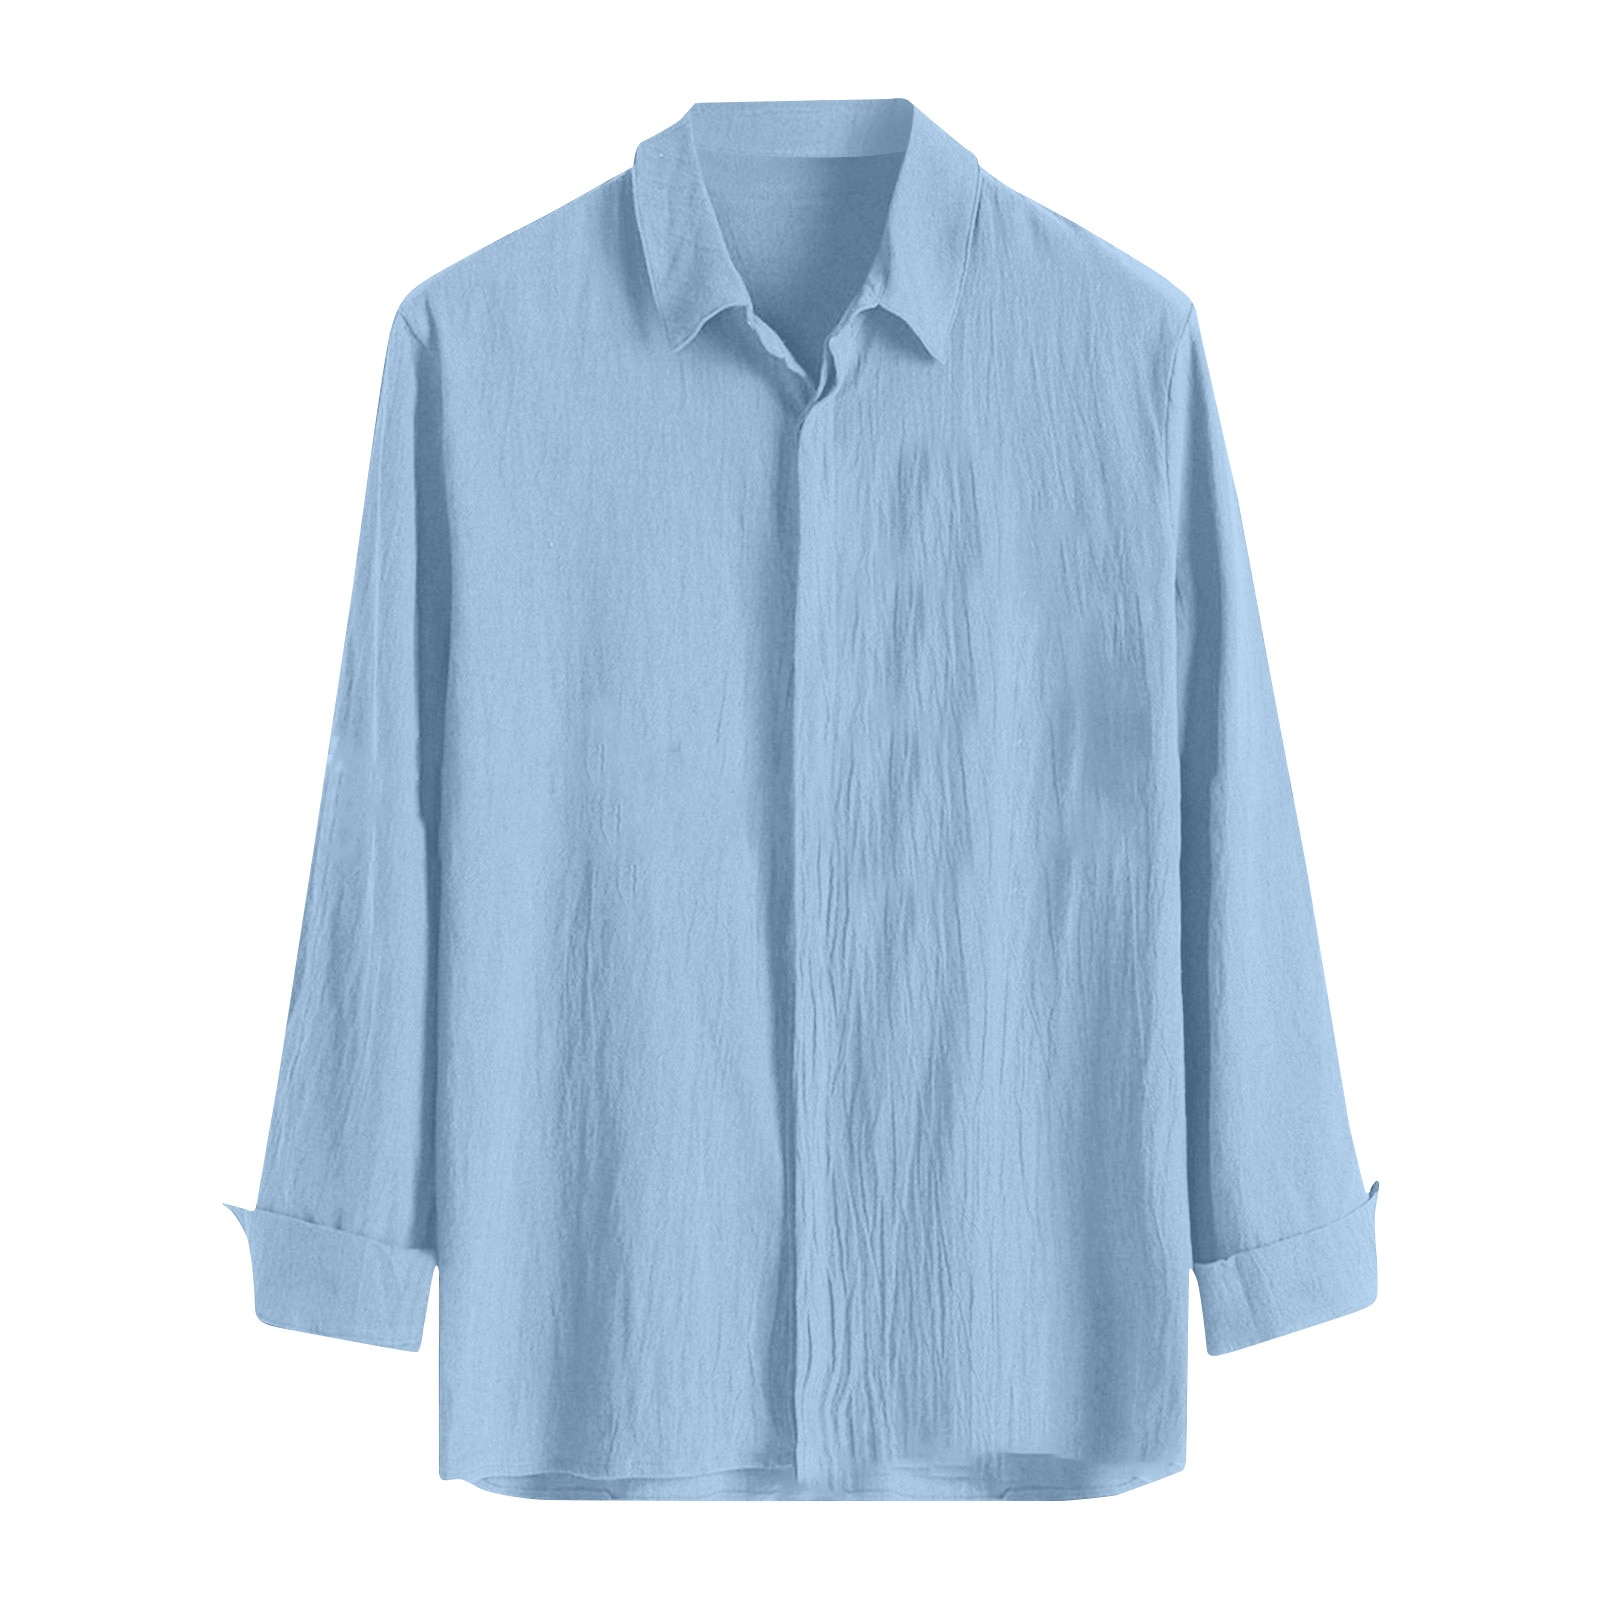 Man Shirts Summer Men Long Sleeve Linen Shirt Casual Loose Baggy Solid Color Breathable Button lapel Top Blouse